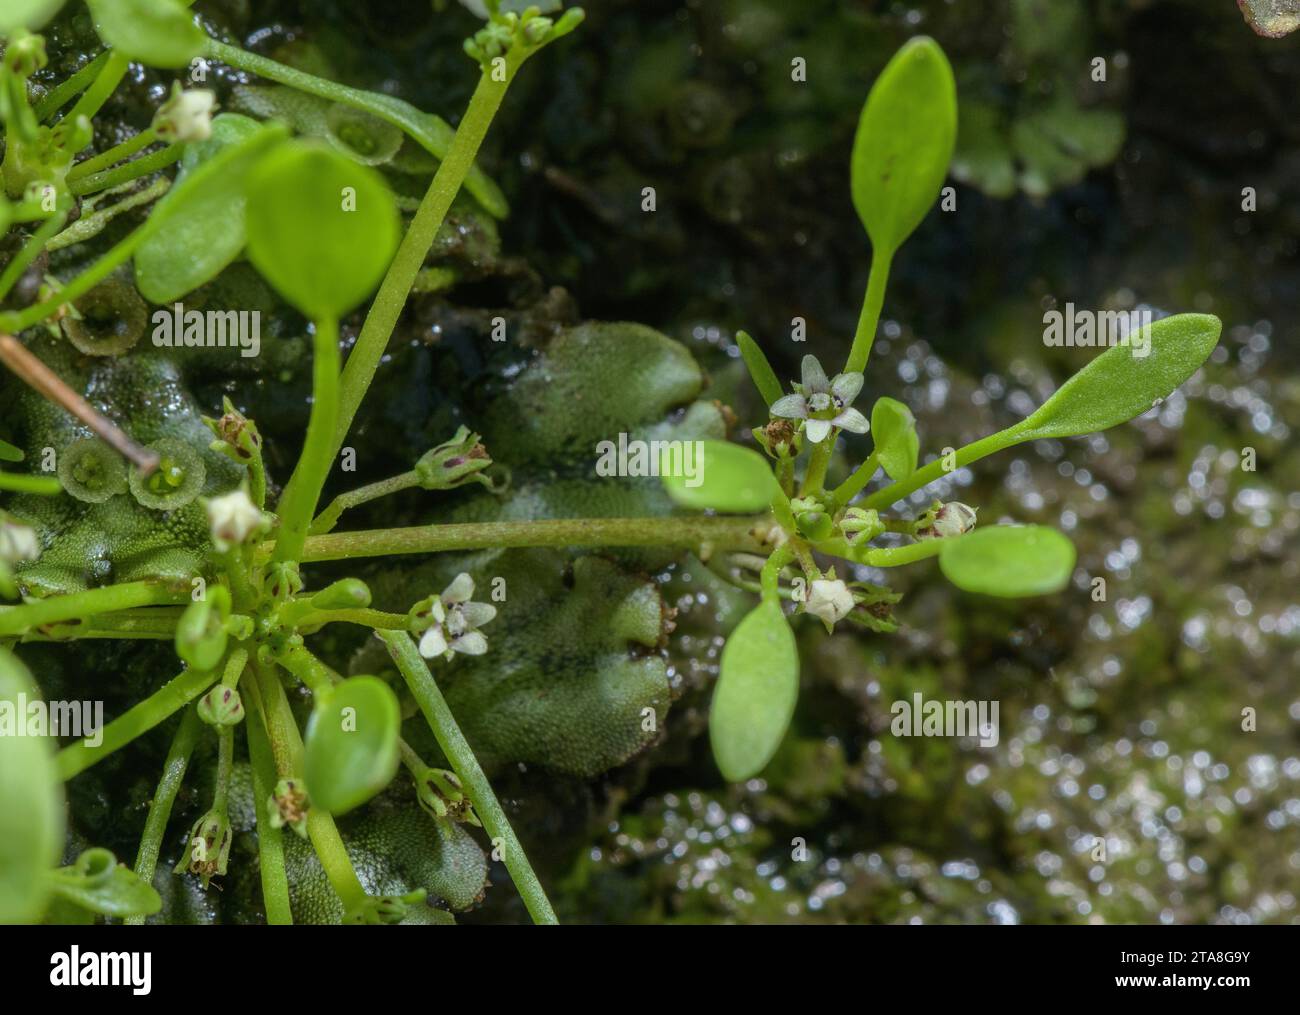 Mudwort, Limosella aquatica, in flower in damp mud on pond edge. Uncommon in UK. Stock Photo